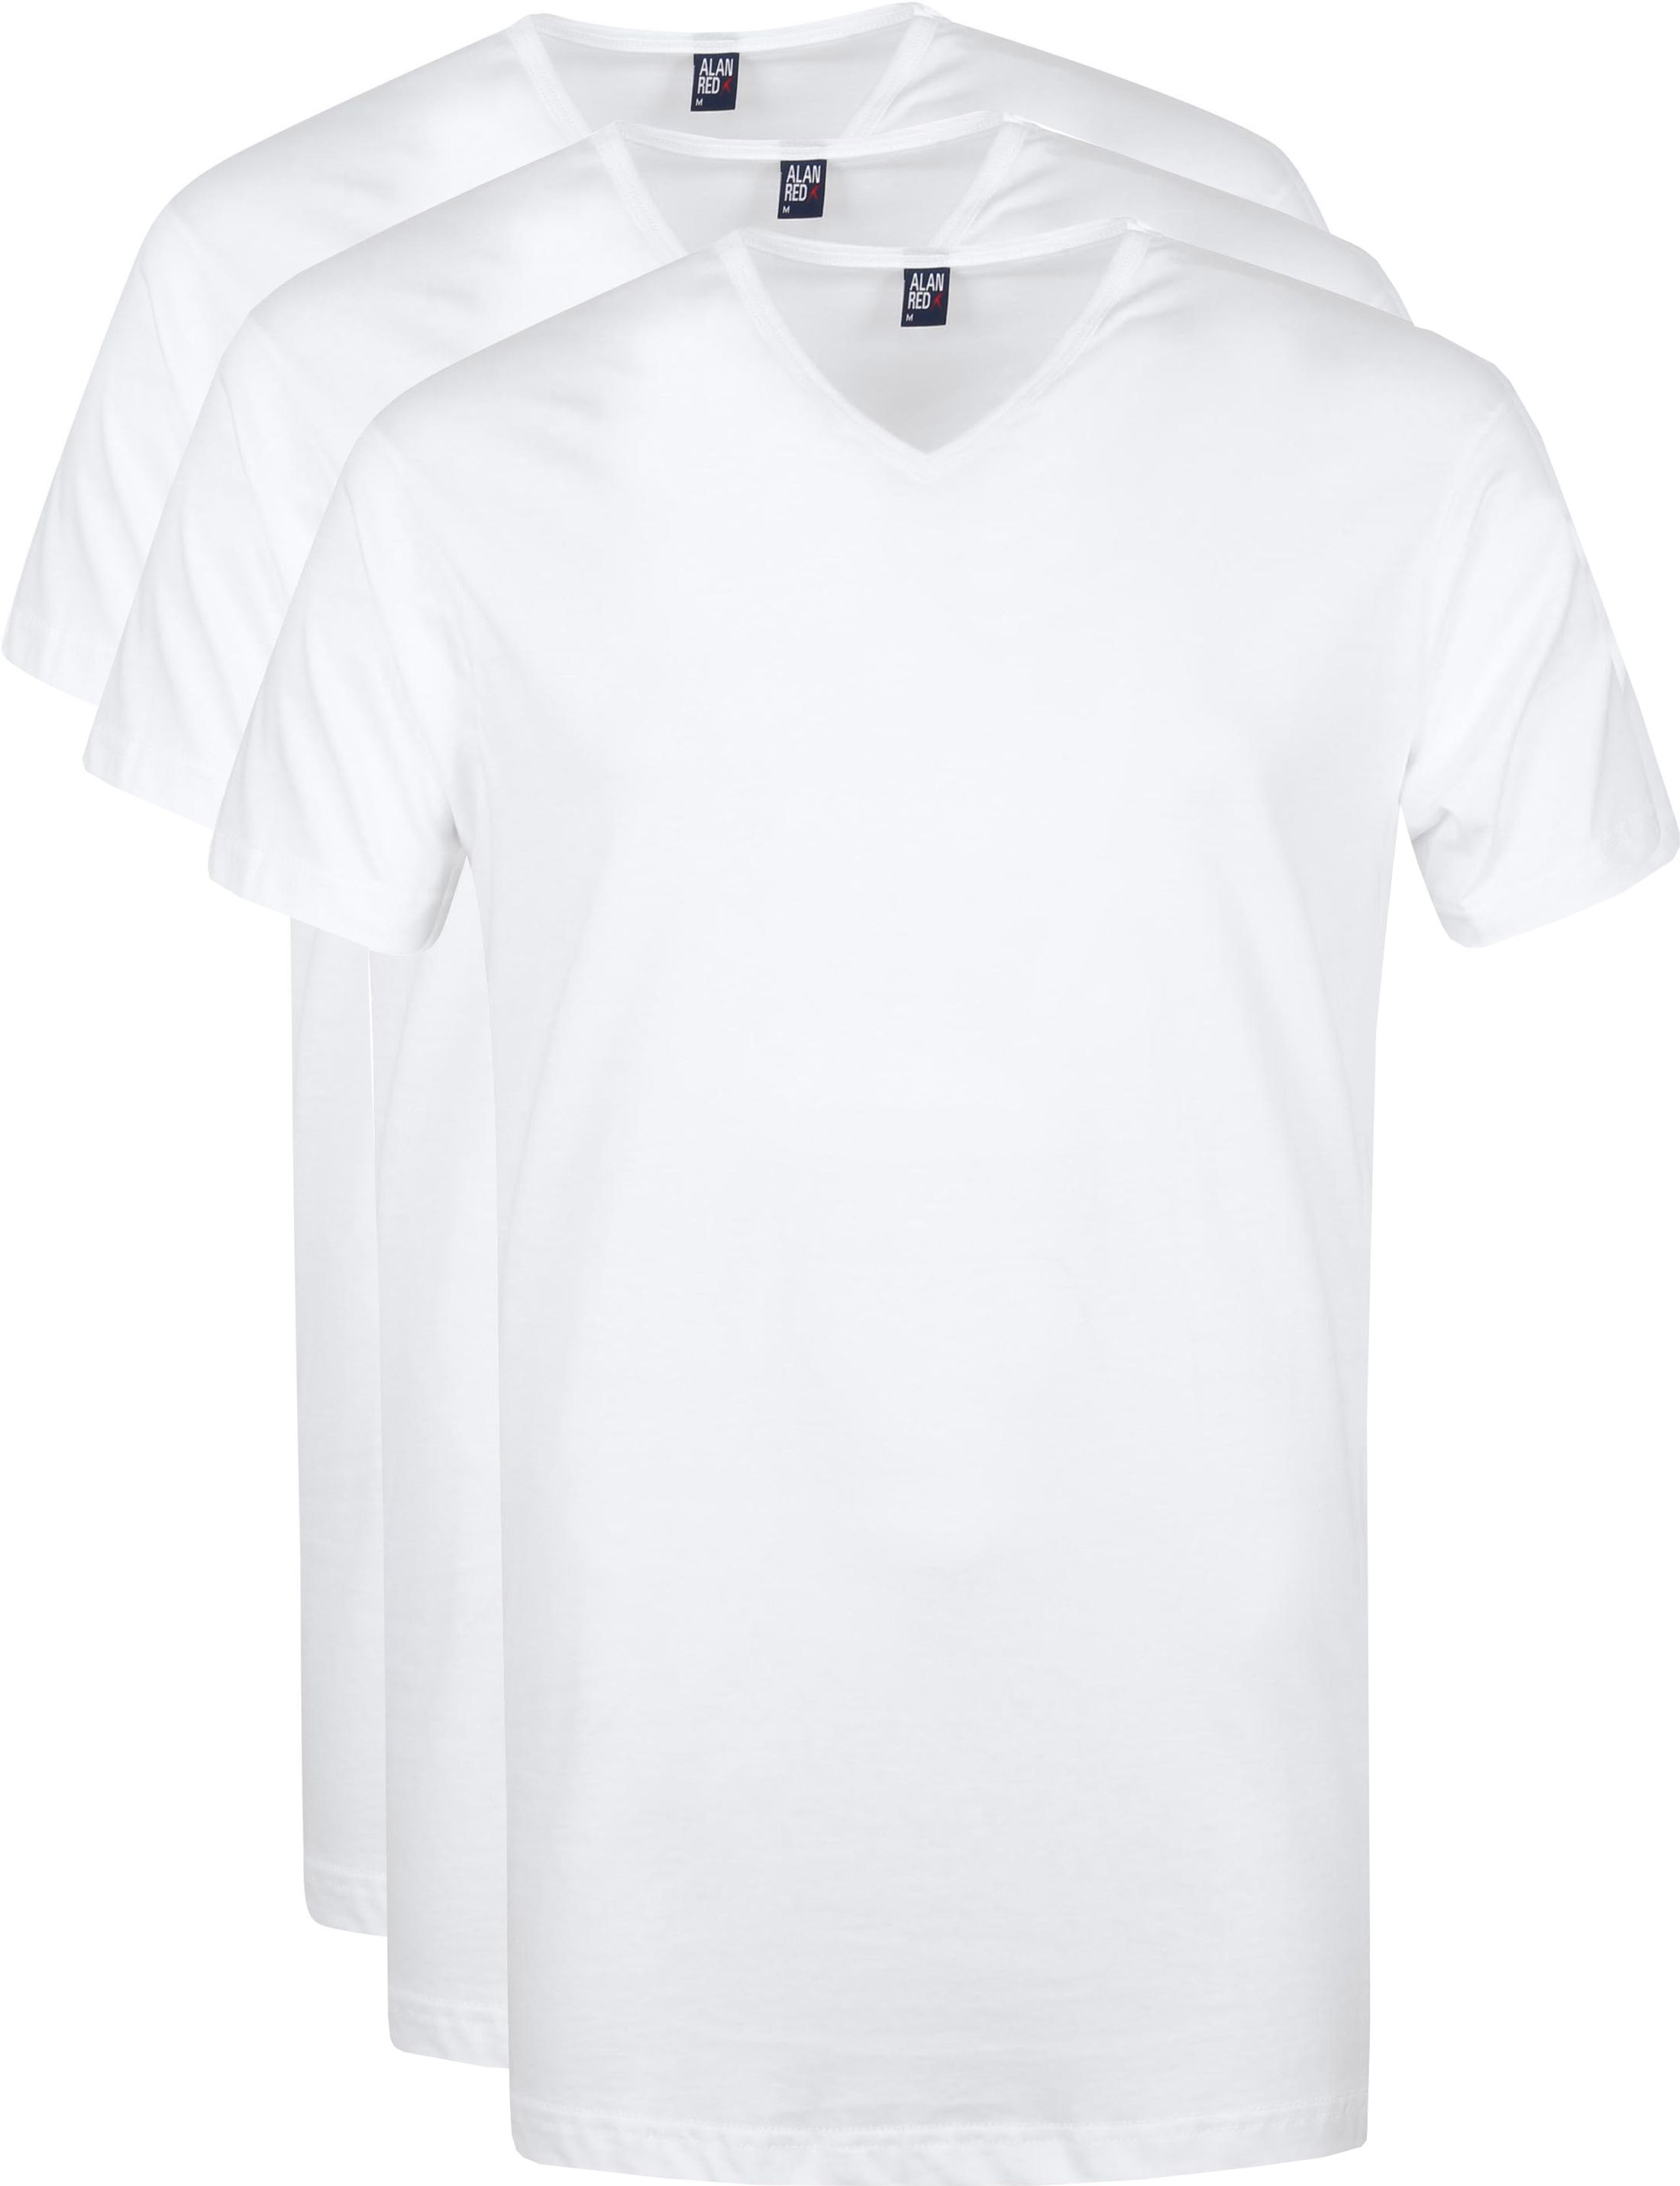 Alan Red Vermont T-Shirt V-Neck 3 Pack White size L